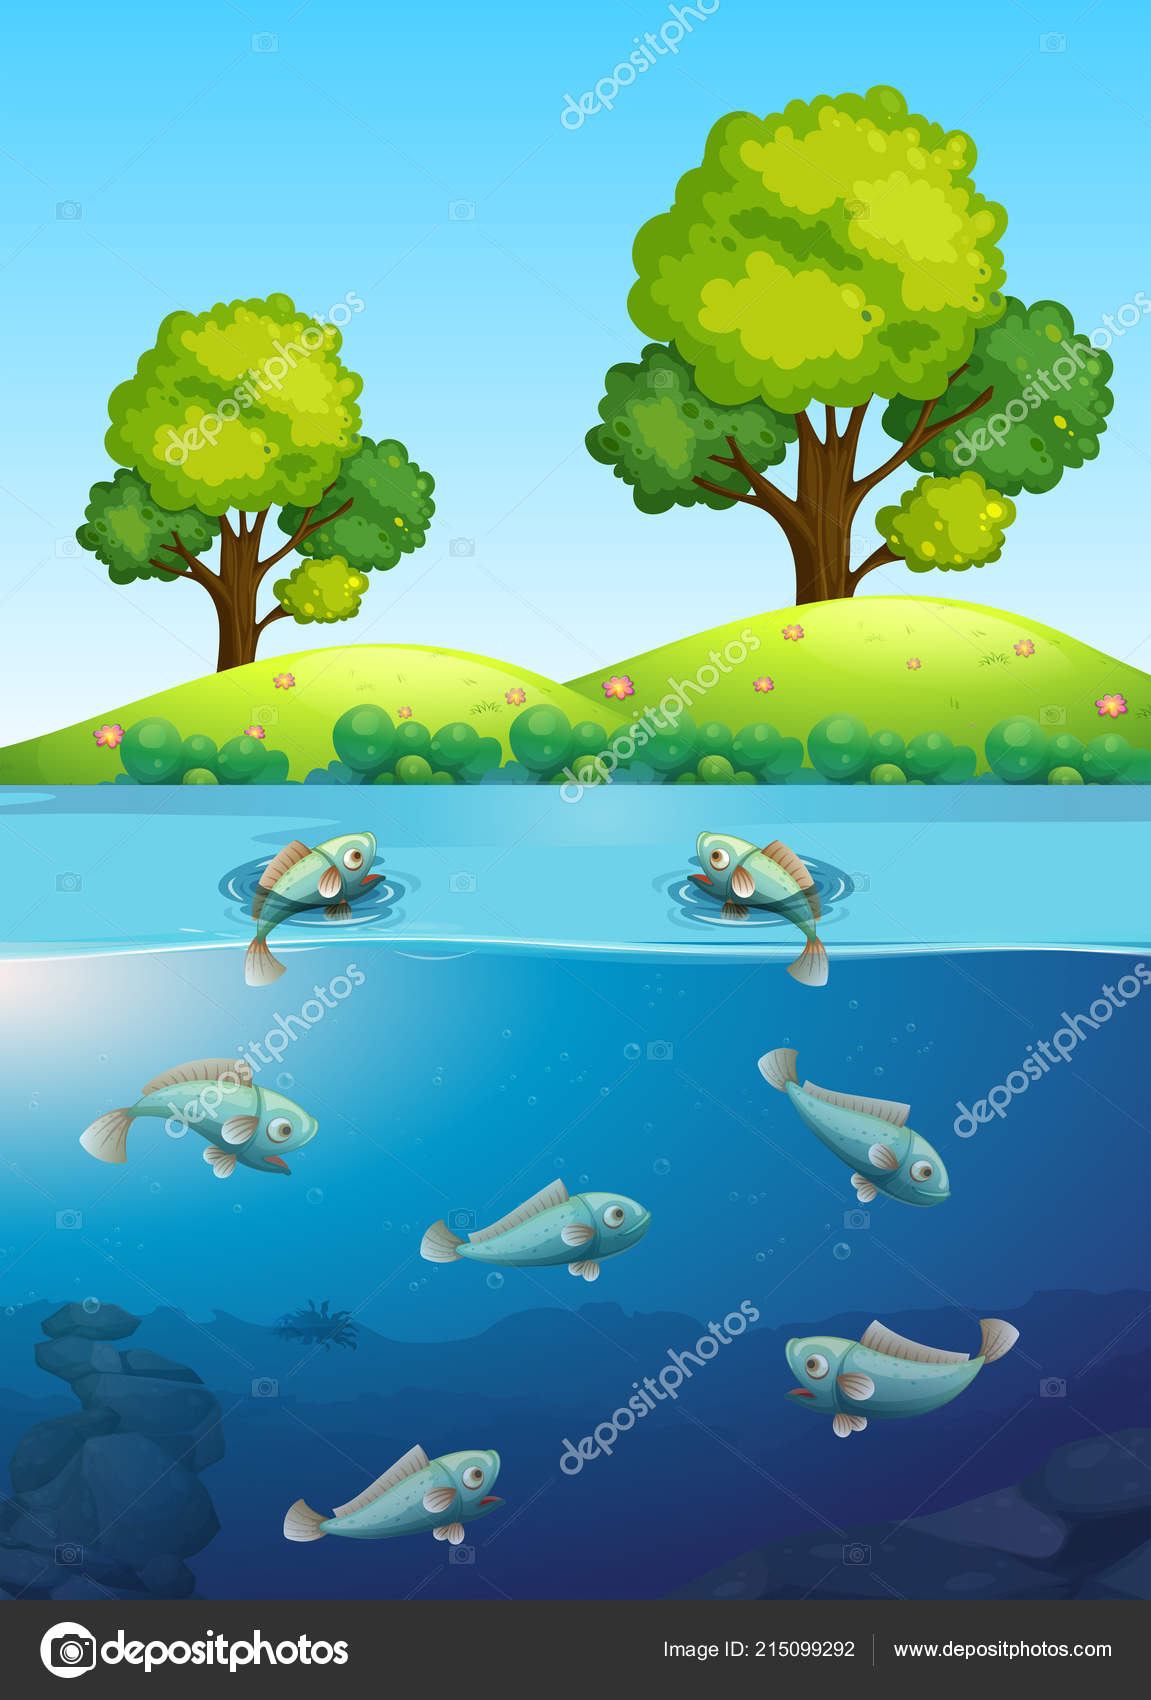 Fish pond clipart Vector Art Stock Images | Depositphotos